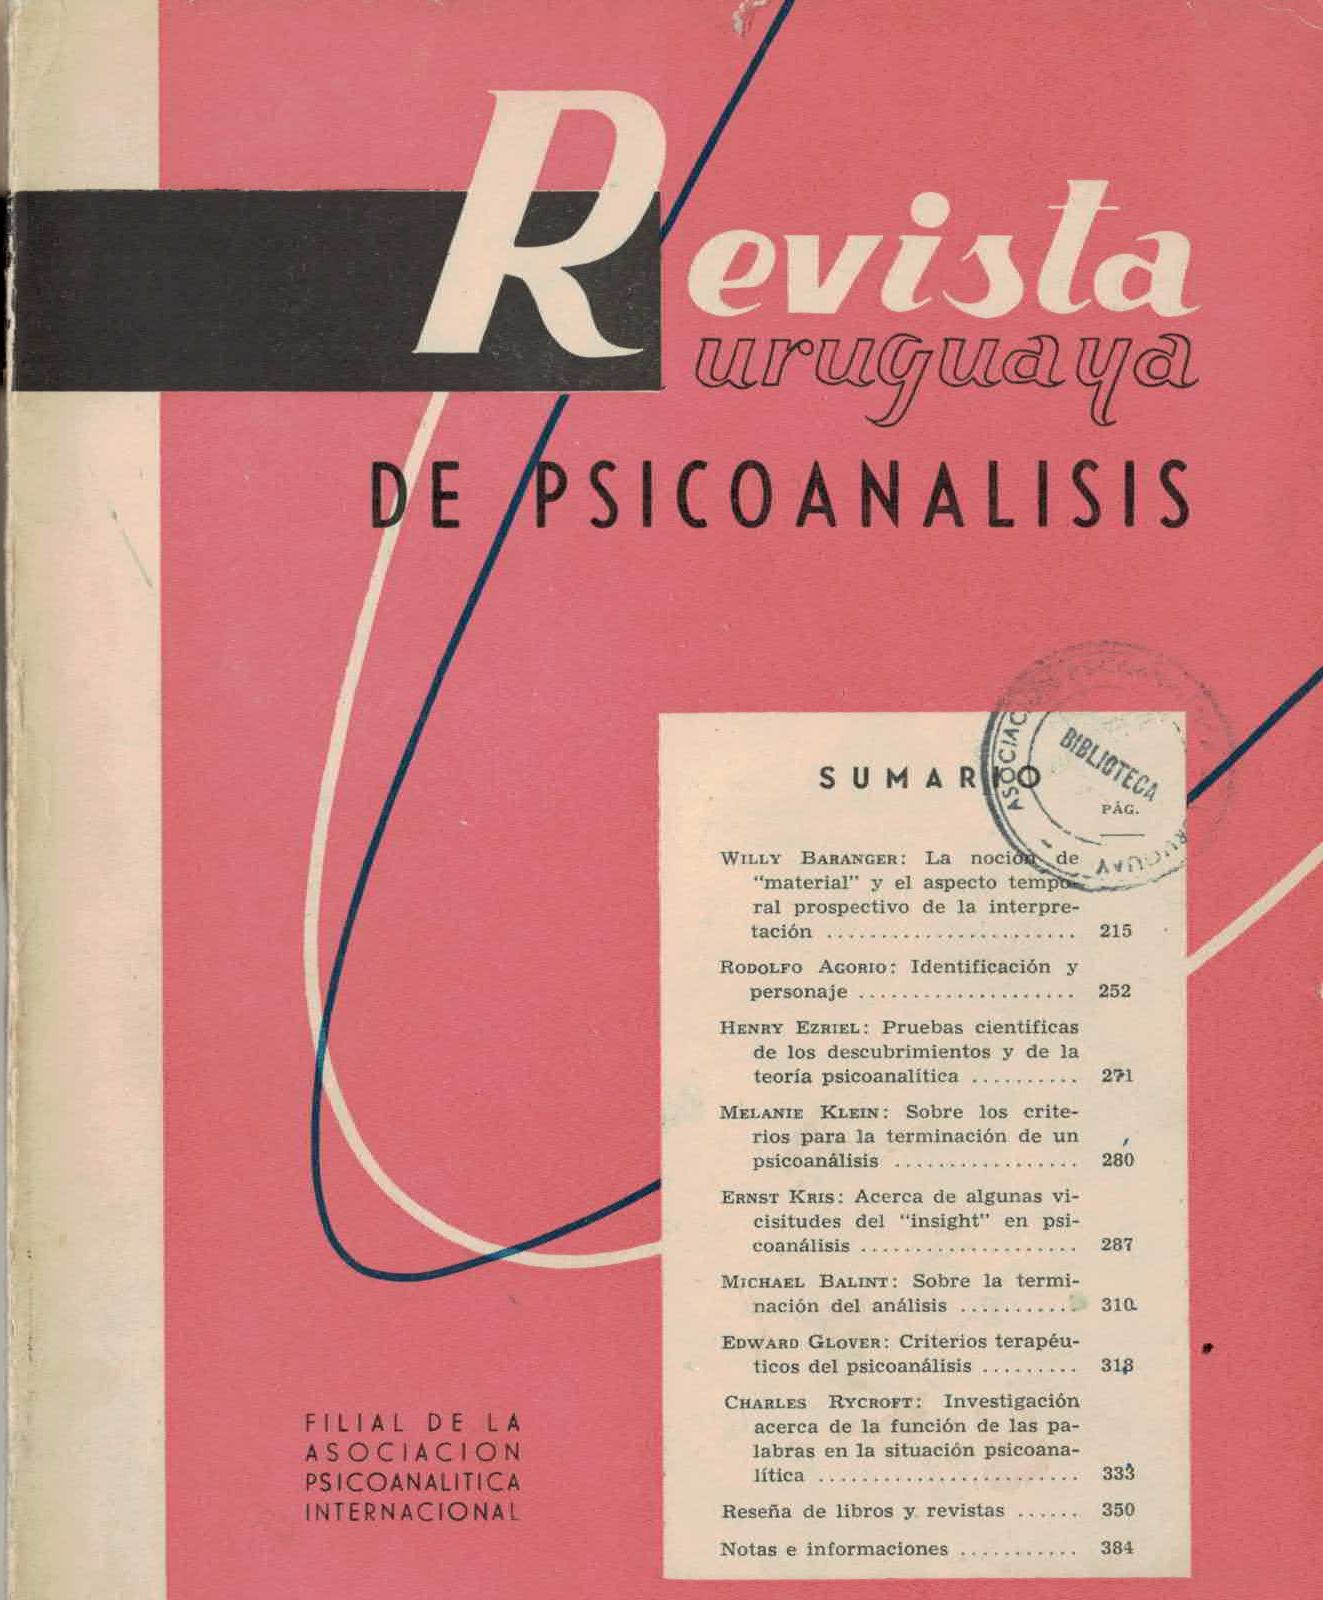 					Ver Vol. 4 Núm. 2 (1961): Revista Uruguaya de Psicoanálisis
				